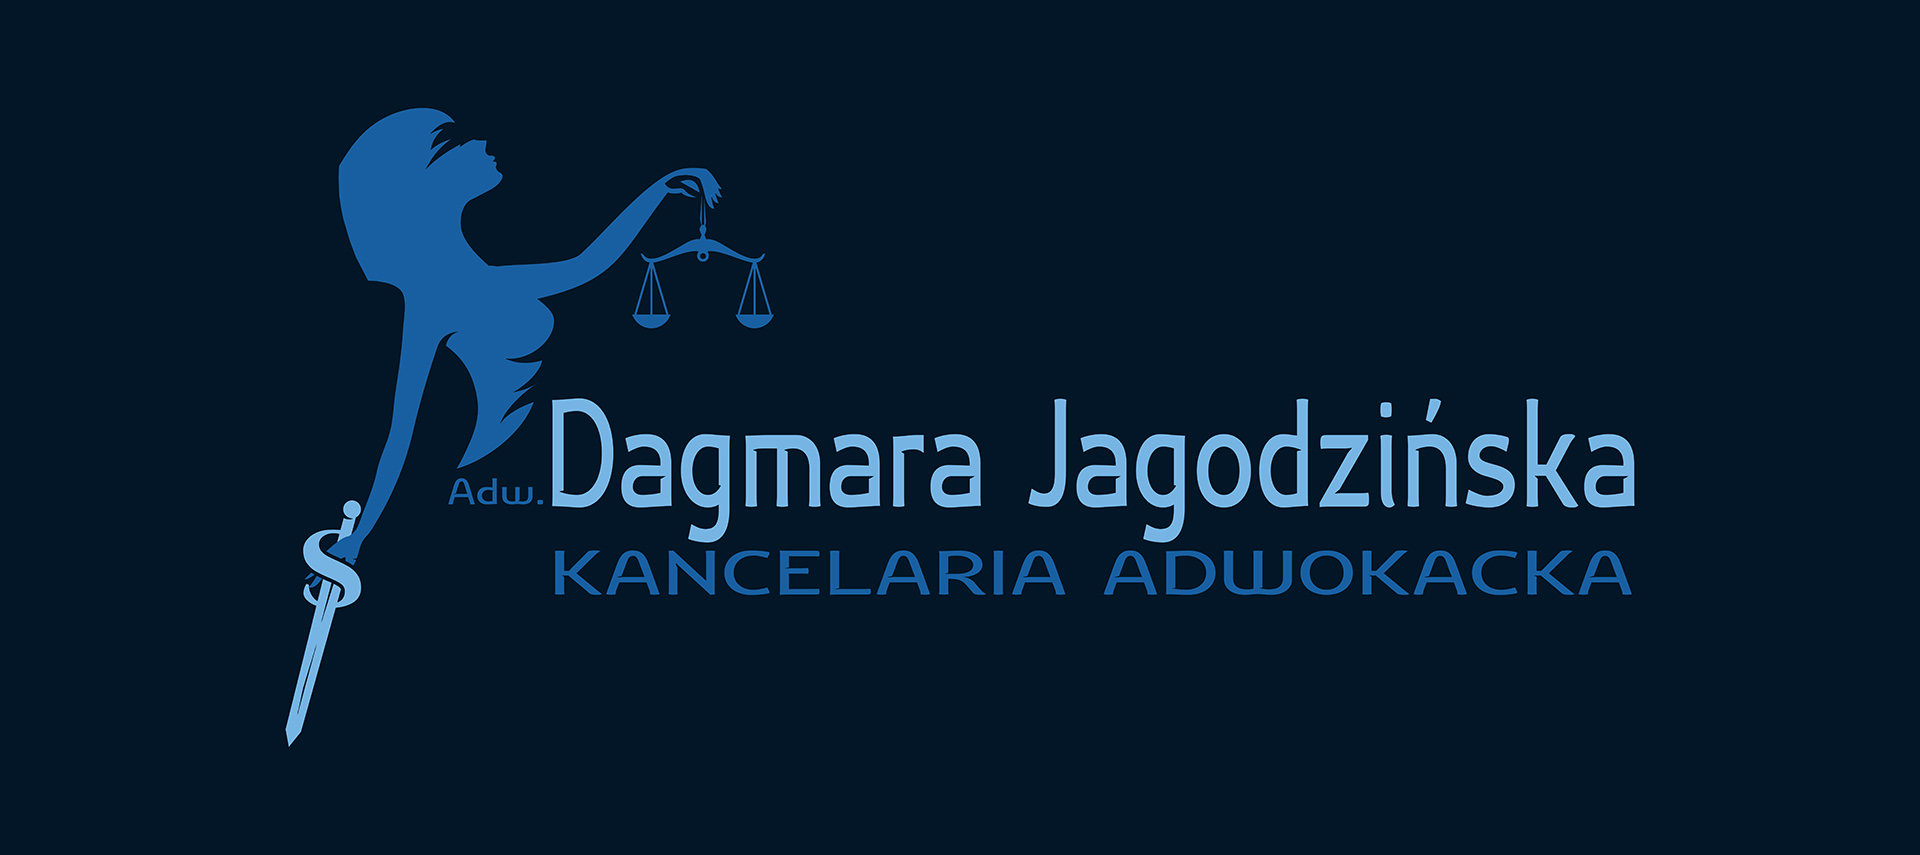 Adwokat Dagmara Jagodzińska